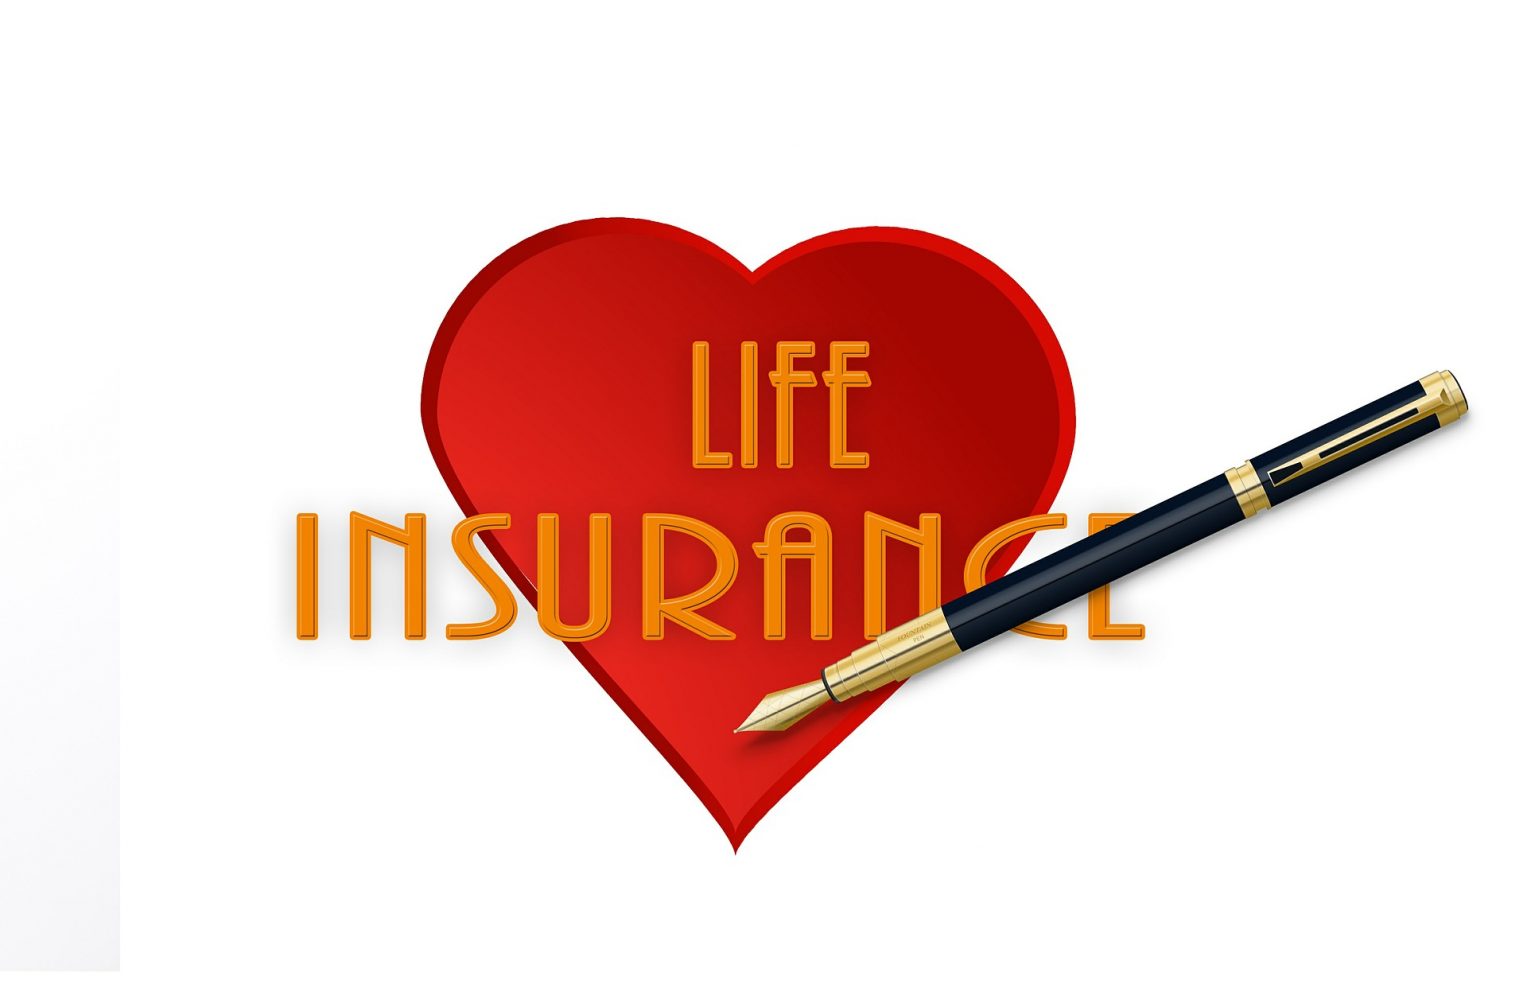 Life insurance: Assurance for OFWs